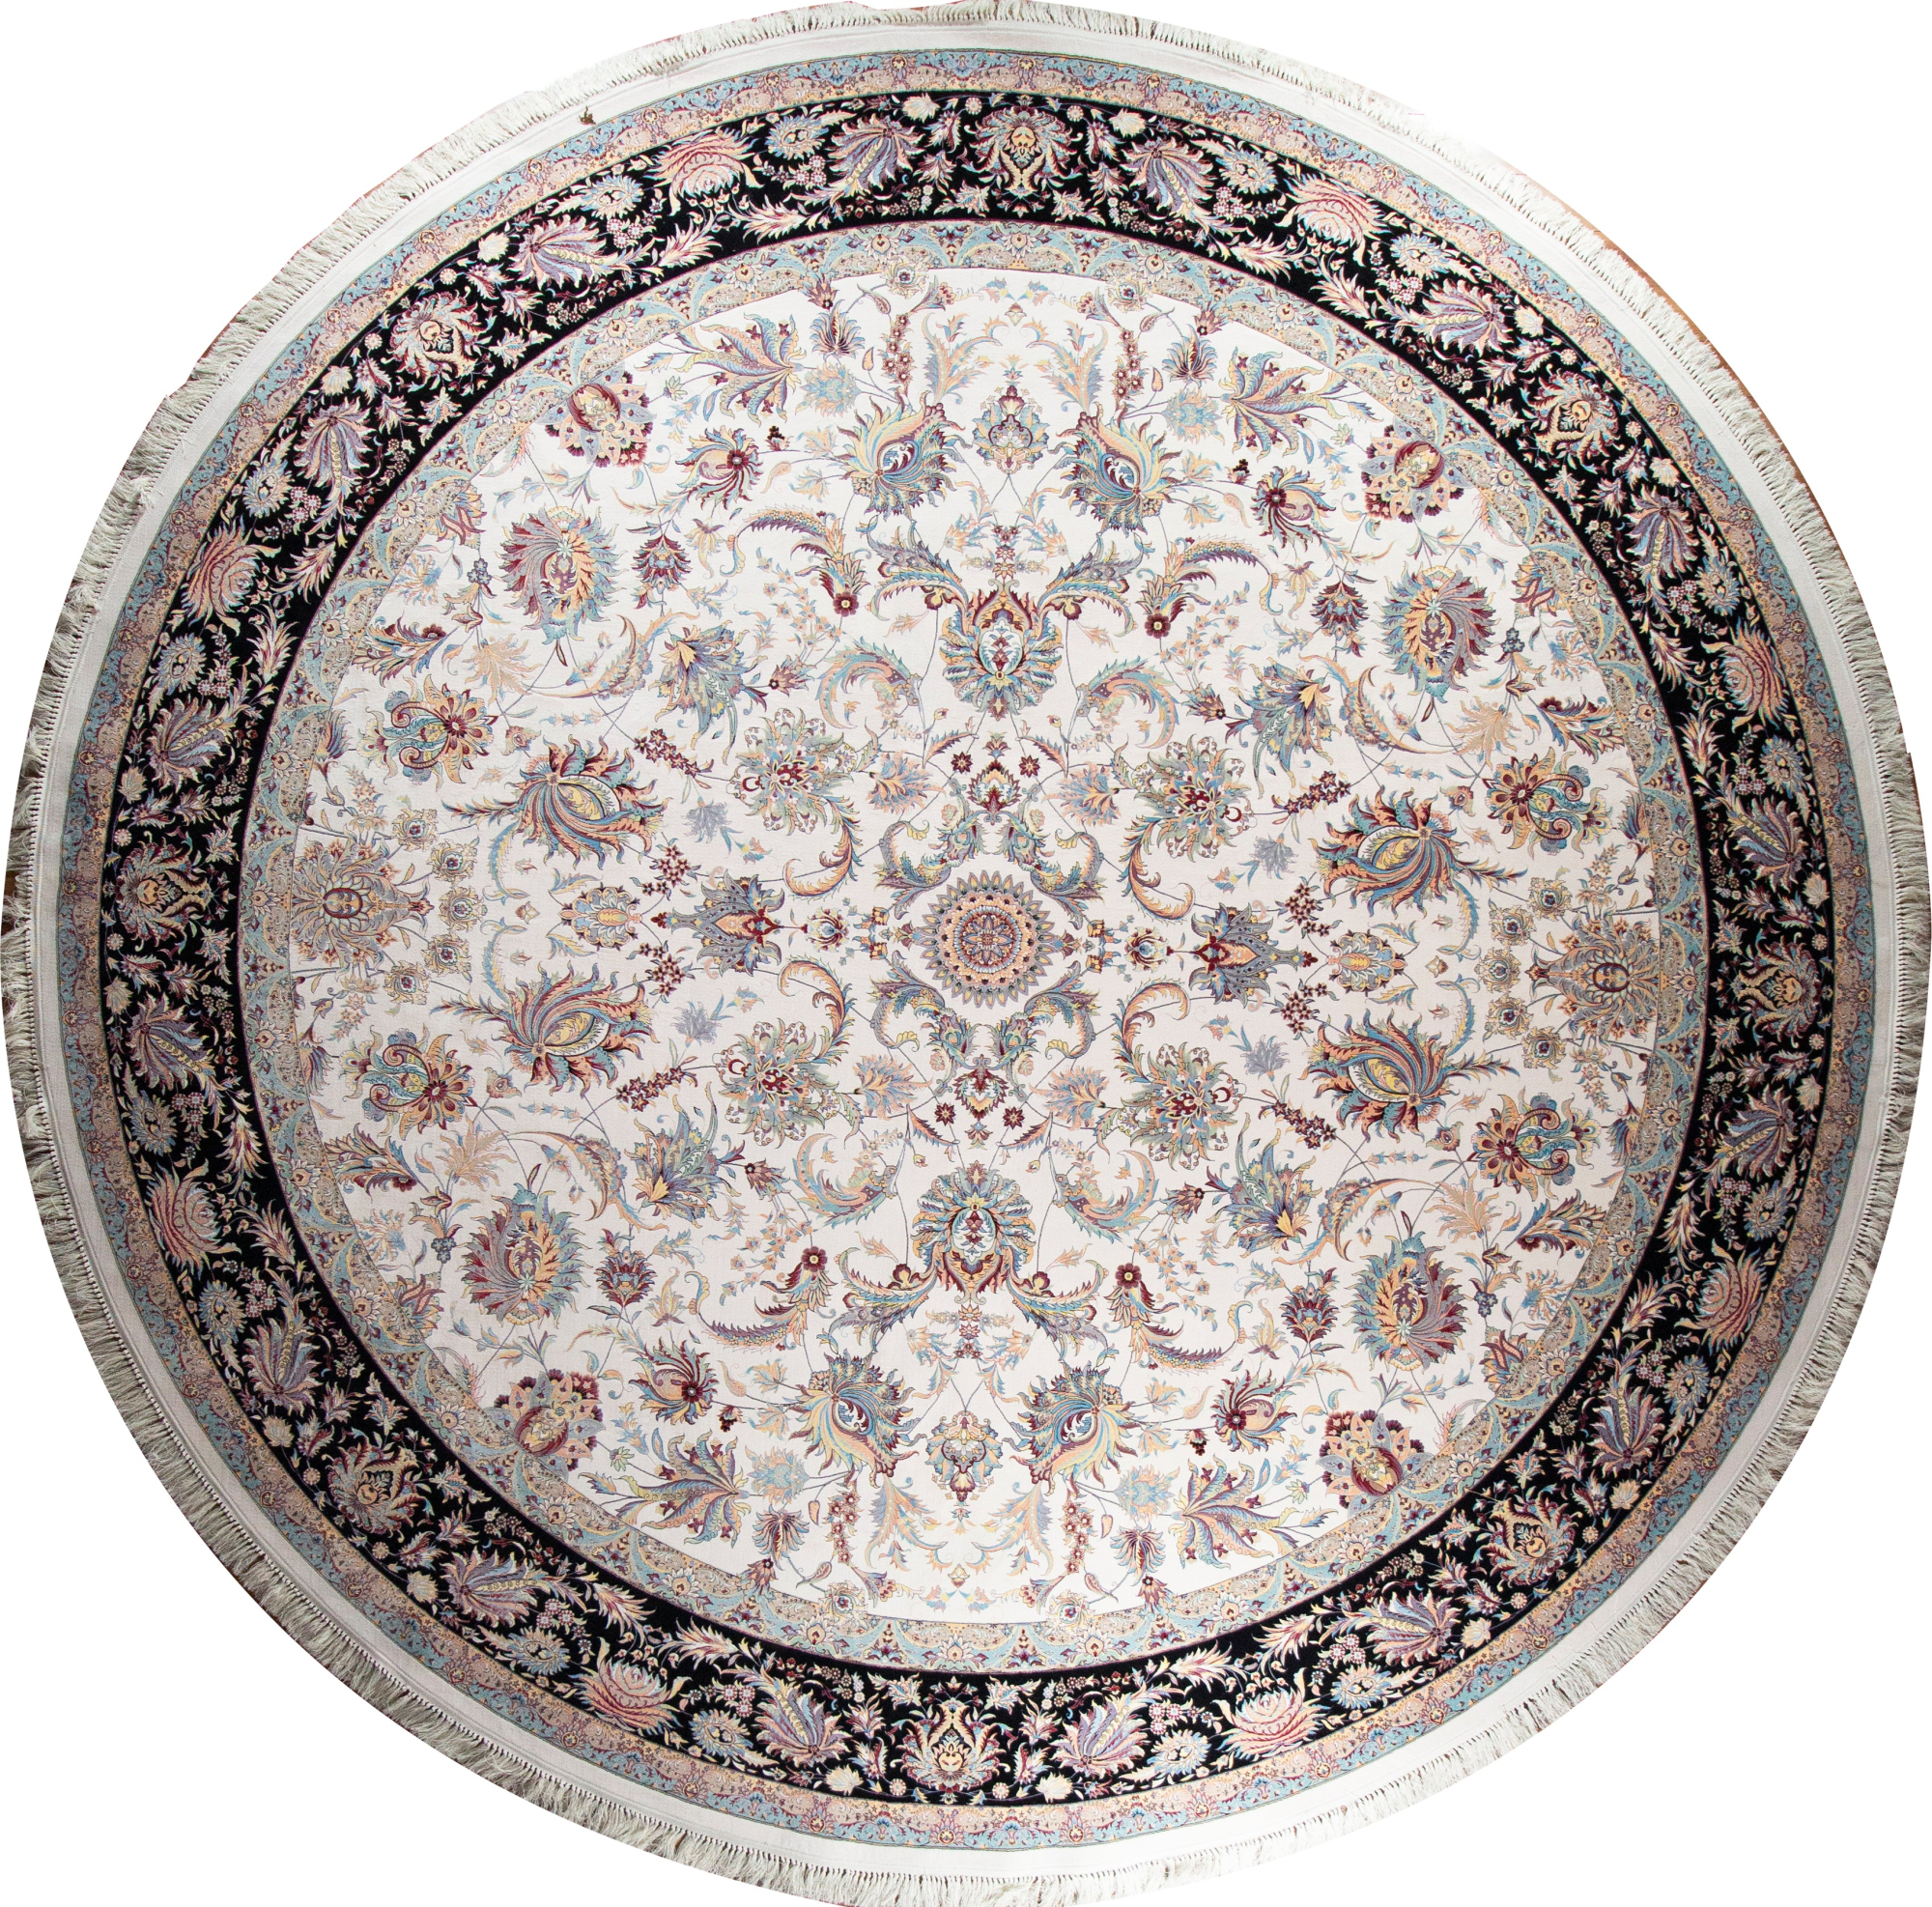 Kingdom Afshan Saltanati Cream With Dark Blue Margin Loomed Round Rug-Area rug for living room, dining area, and bedroom